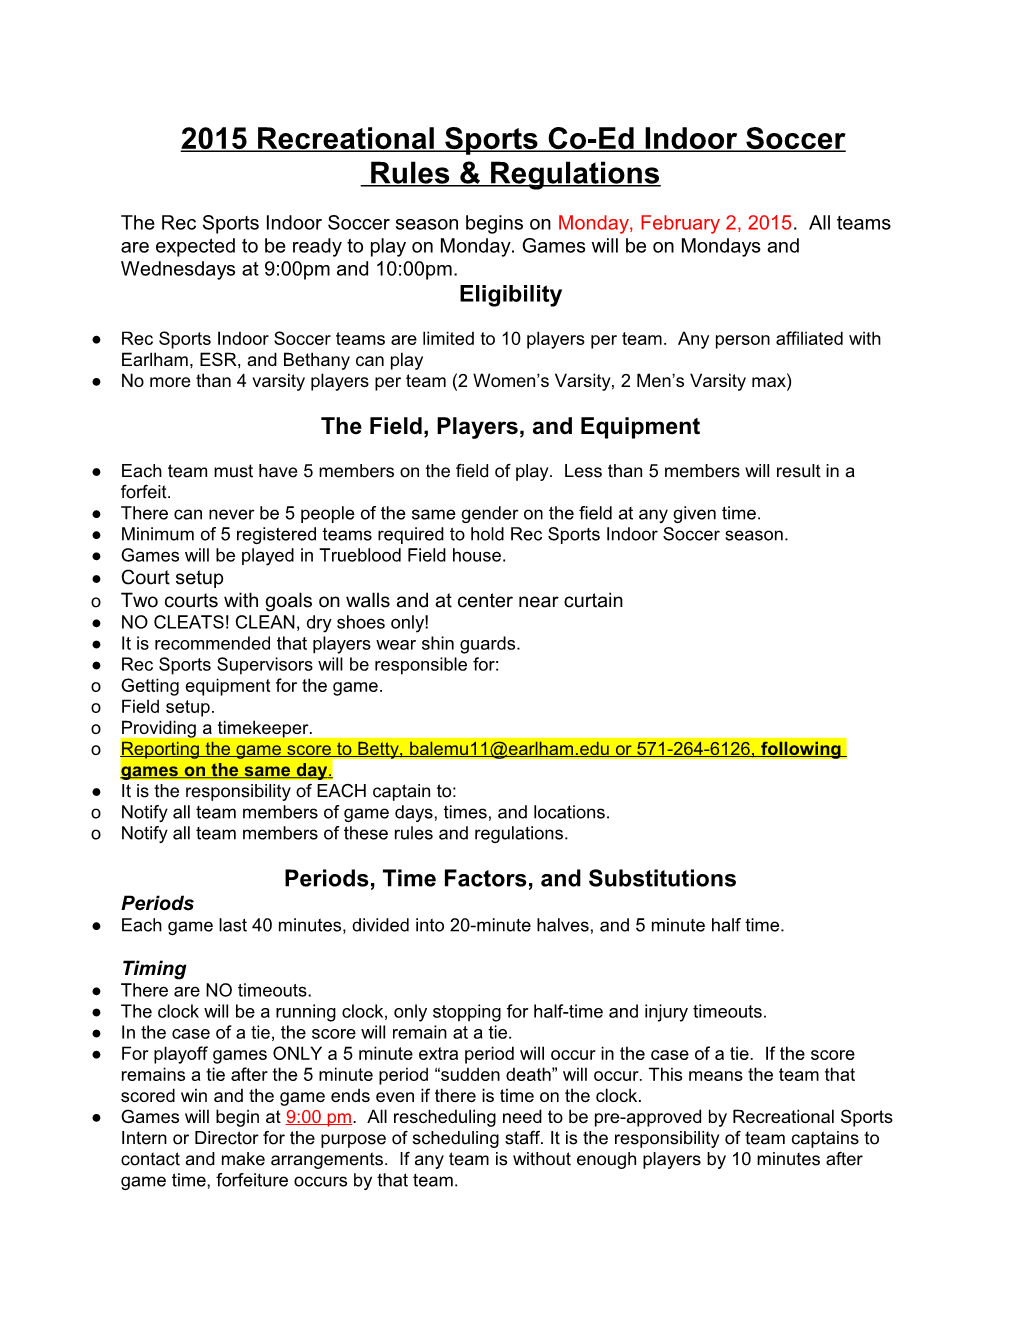 2015 Recreational Indoor Soccer Rules & Regulations